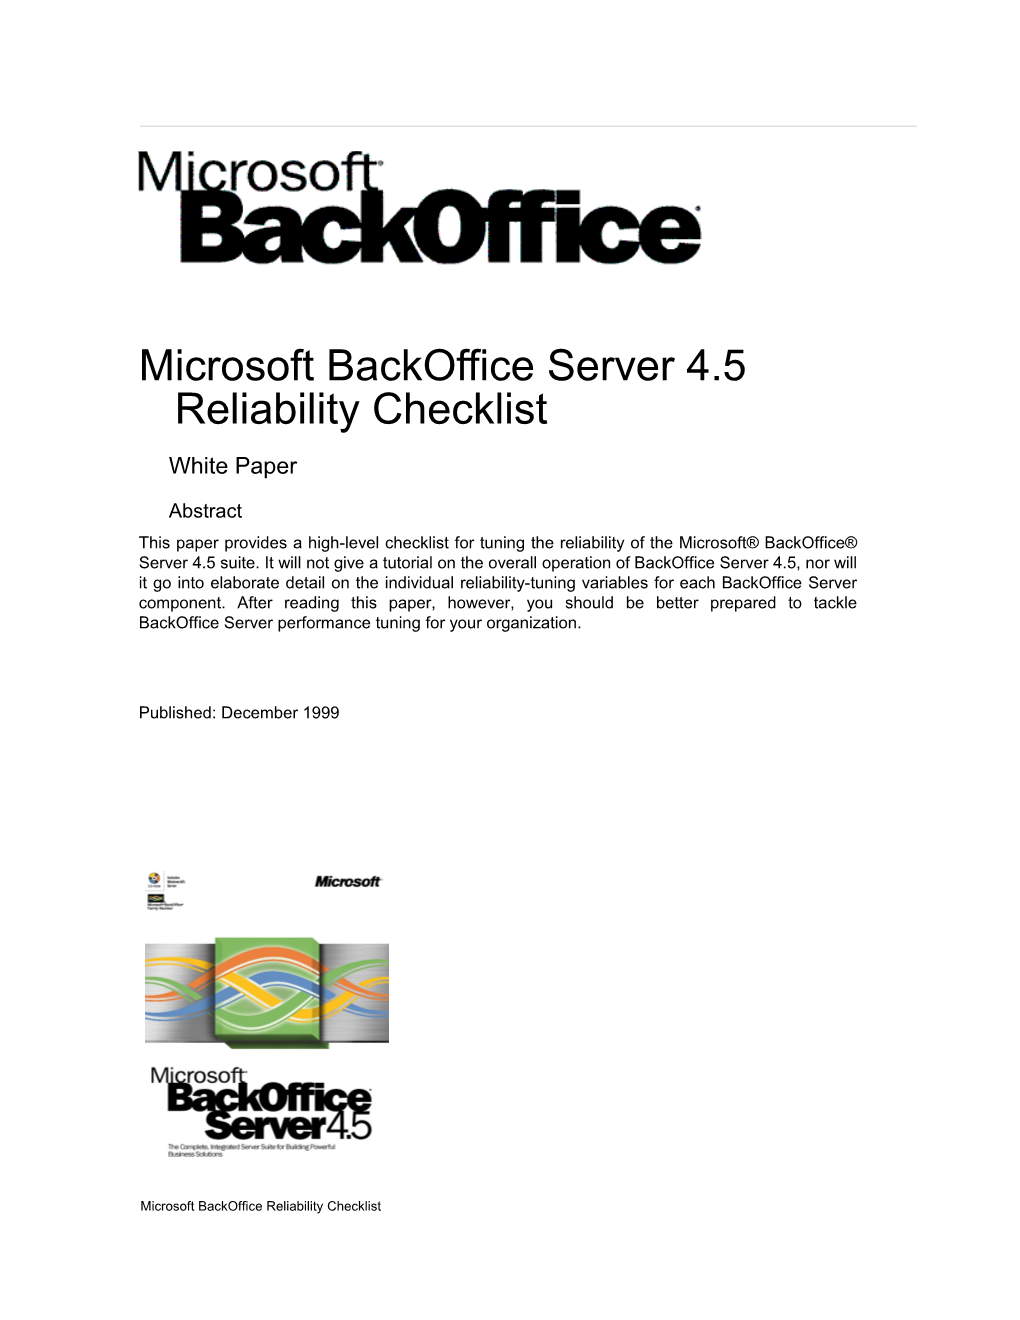 Backoffice Server 4.5 Reliability Checklist